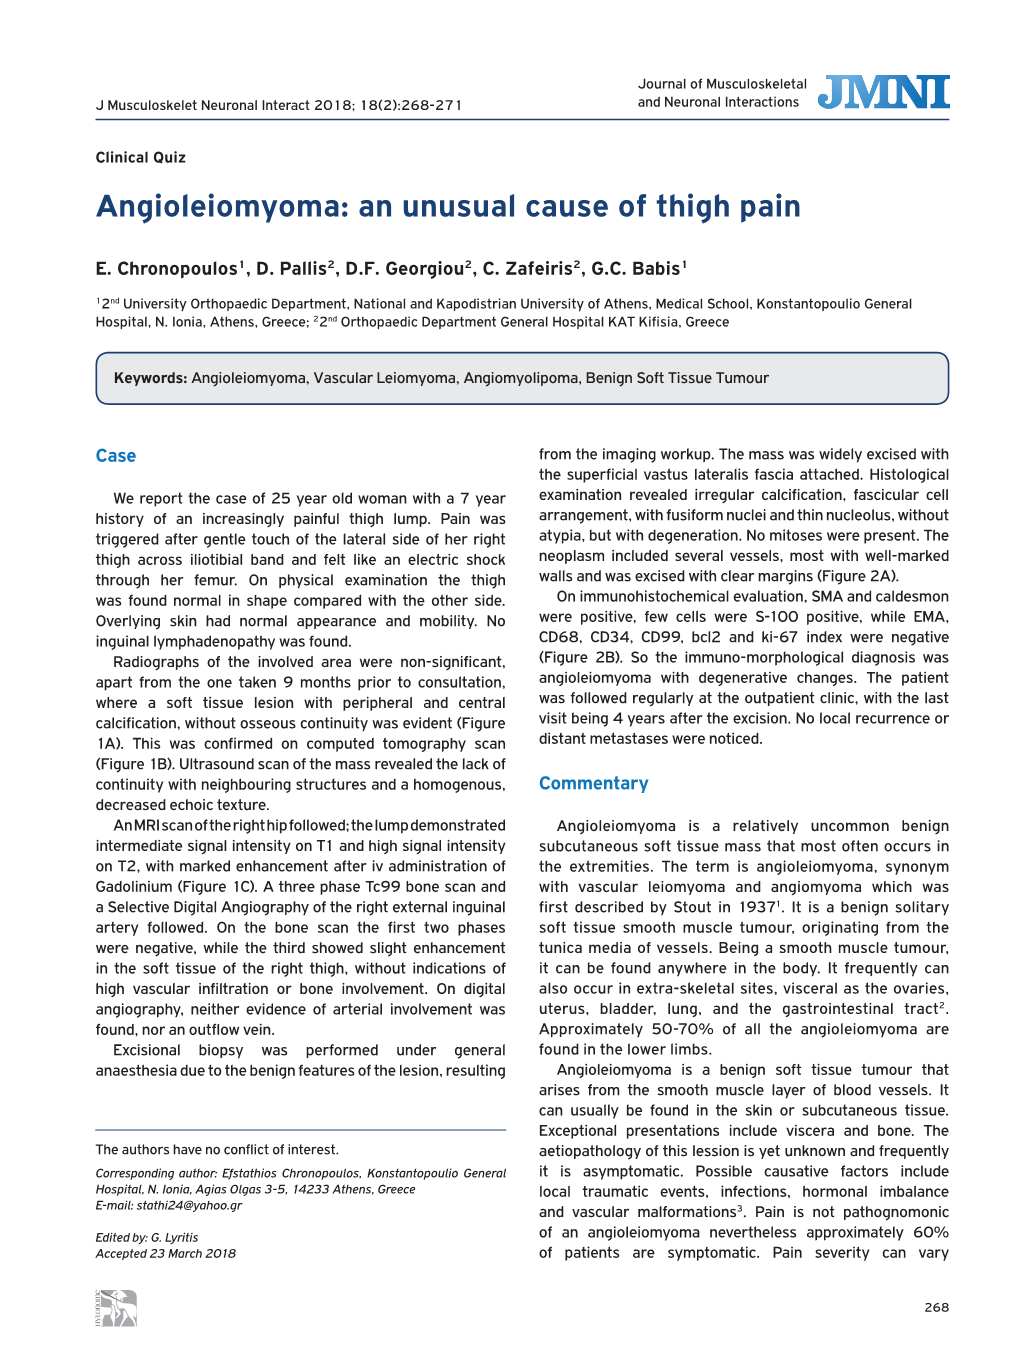 Angioleiomyoma: an Unusual Cause of Thigh Pain